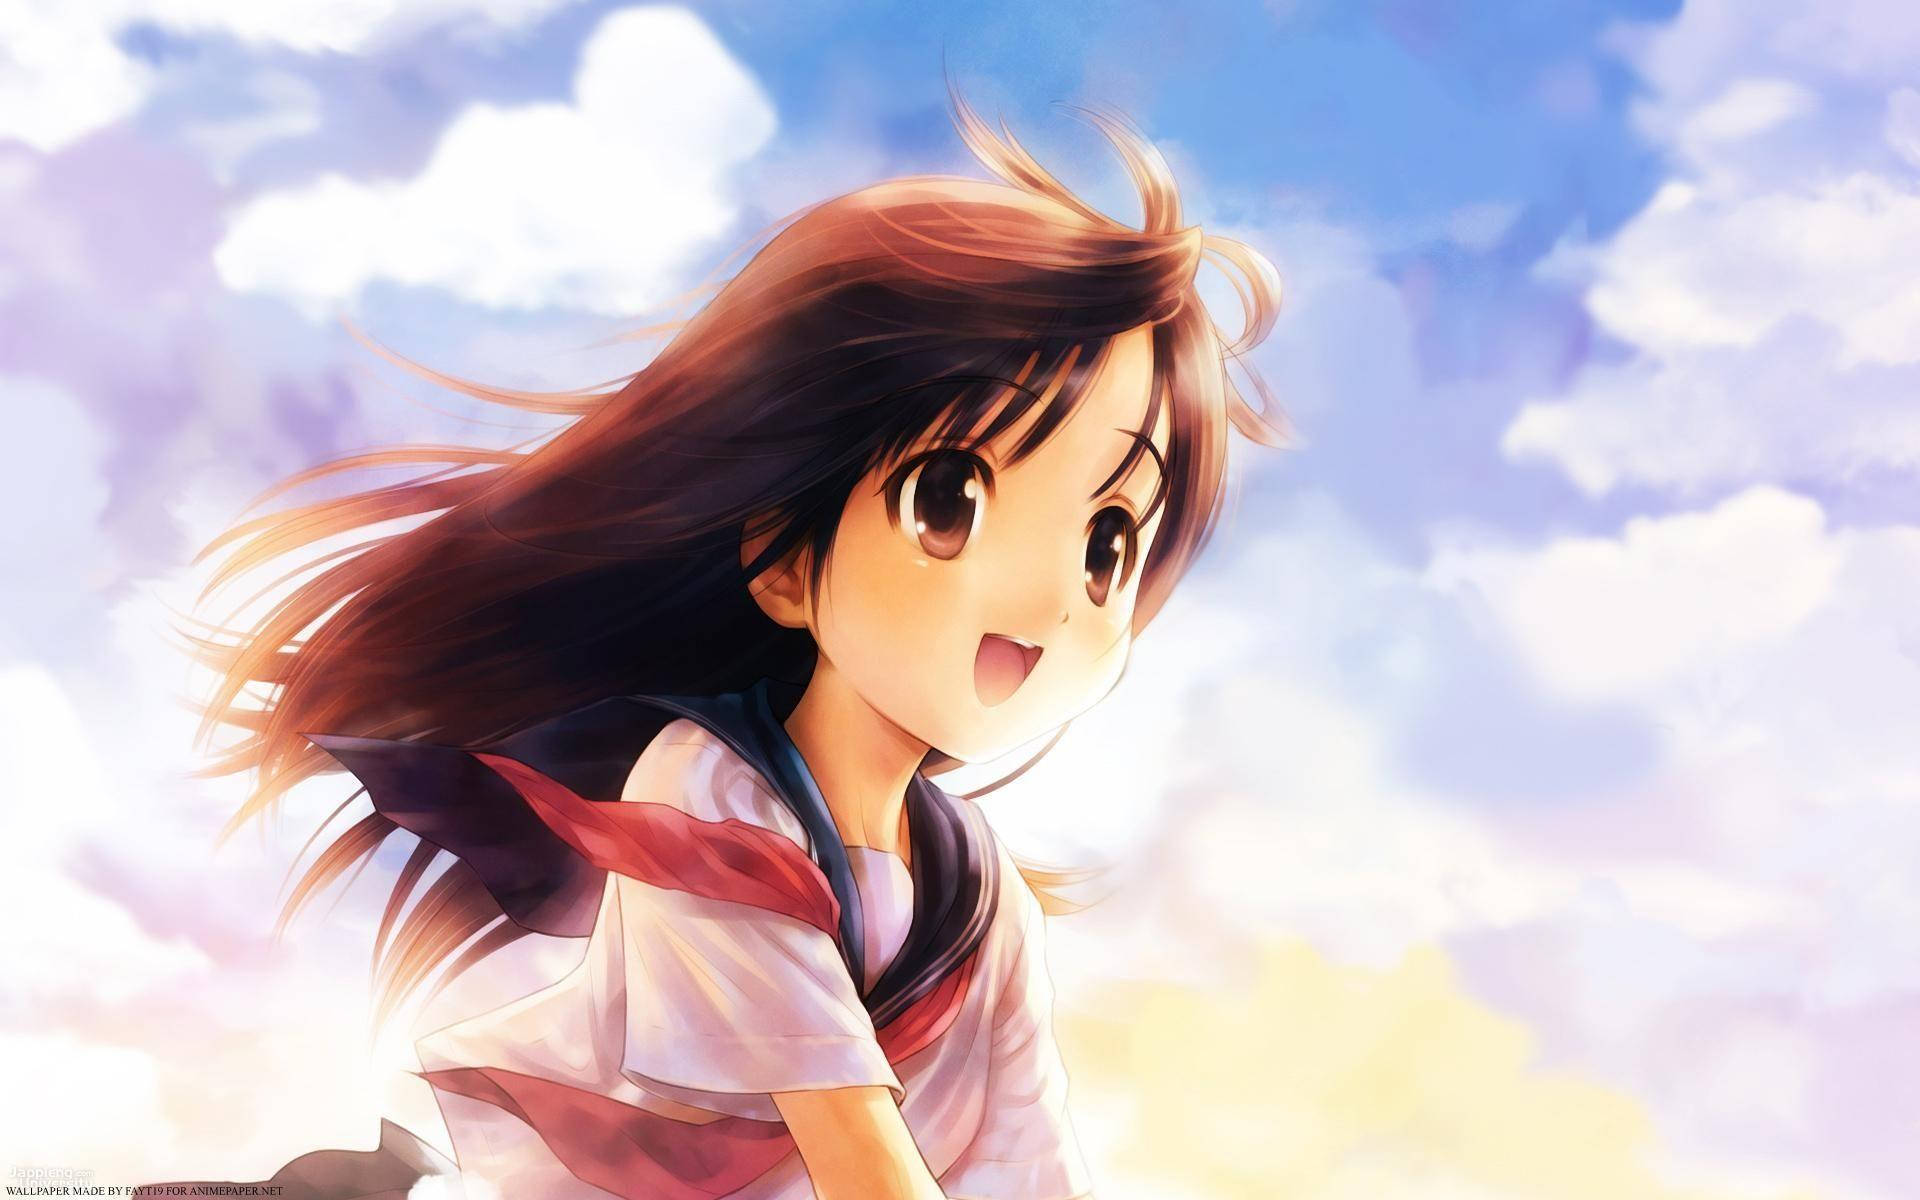 Pretty Girl Cartoon Against Dreamy Sky Background